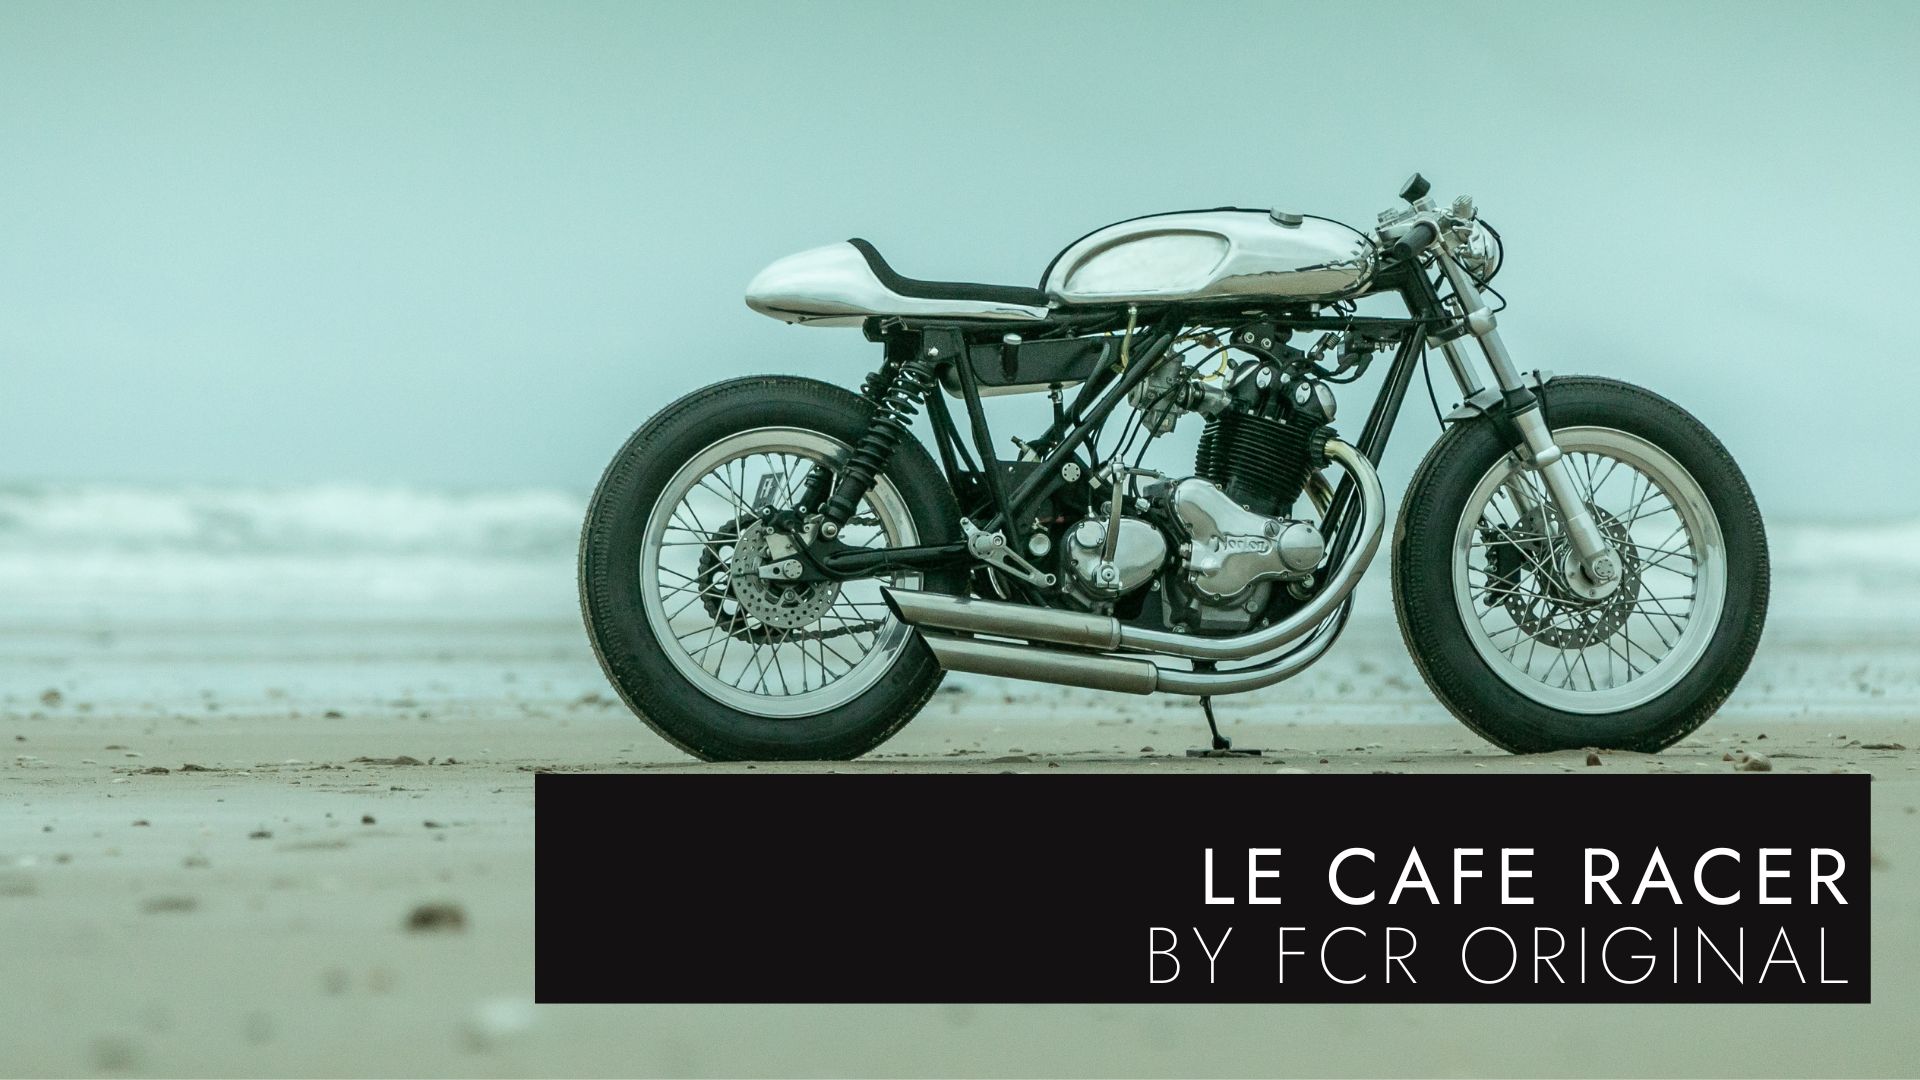 Le Cafe Racer by FCR Original